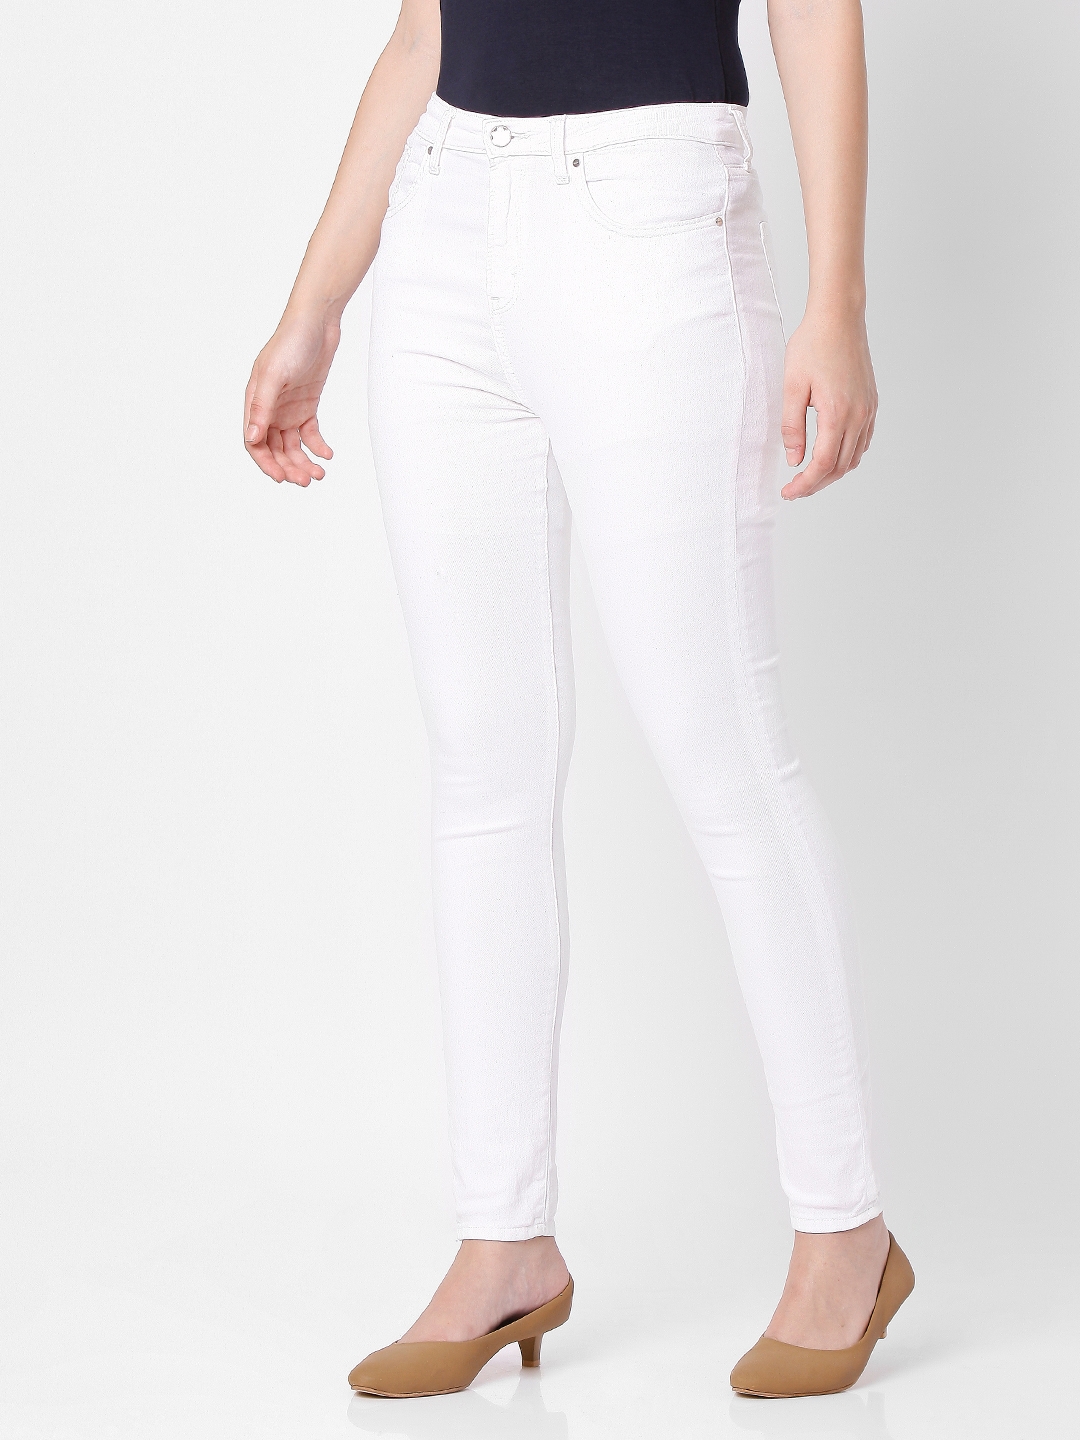 spykar | Women's White Cotton Solid Skinny Jeans 1